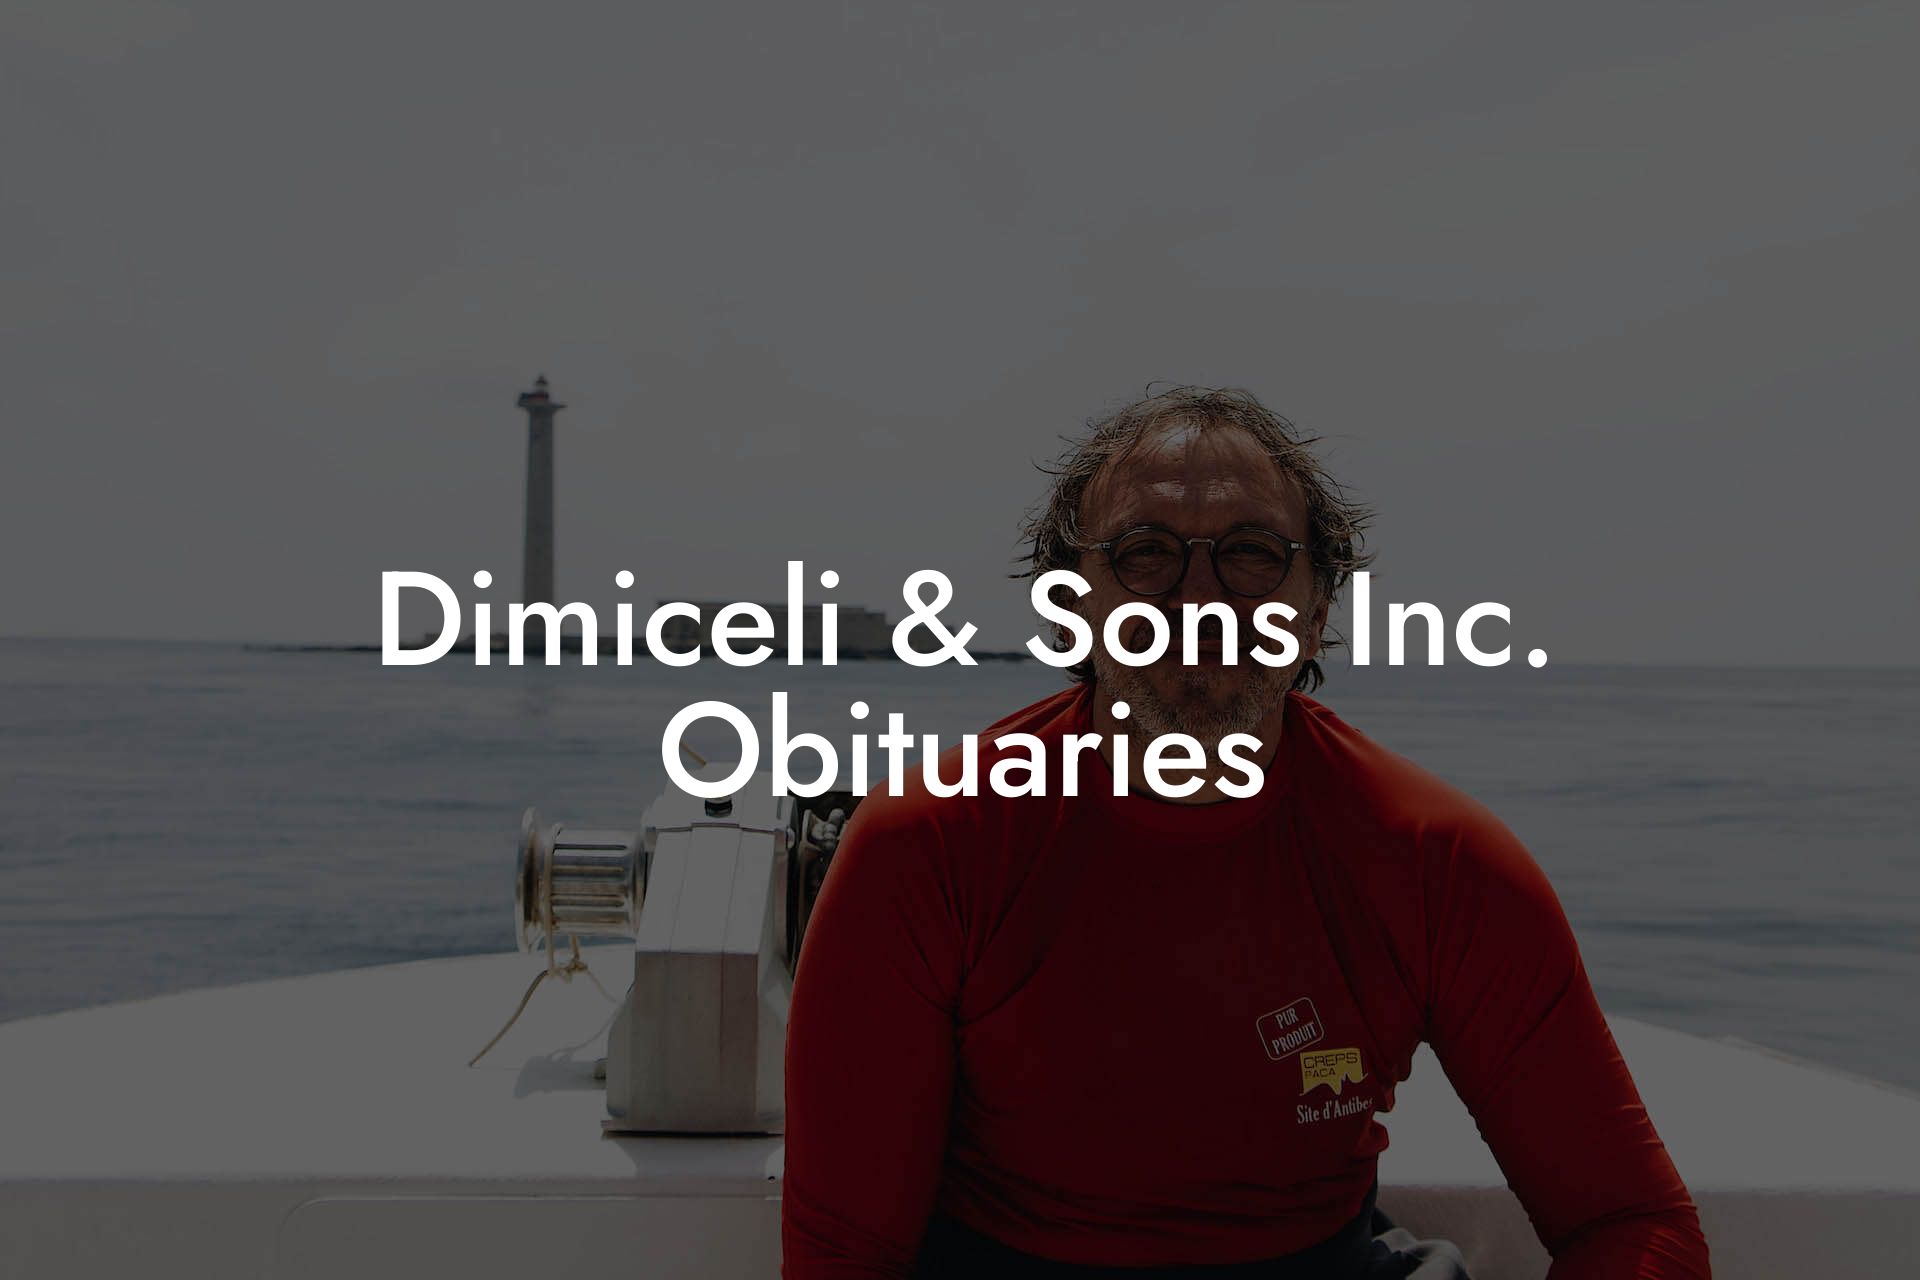 Dimiceli & Sons Inc. Obituaries